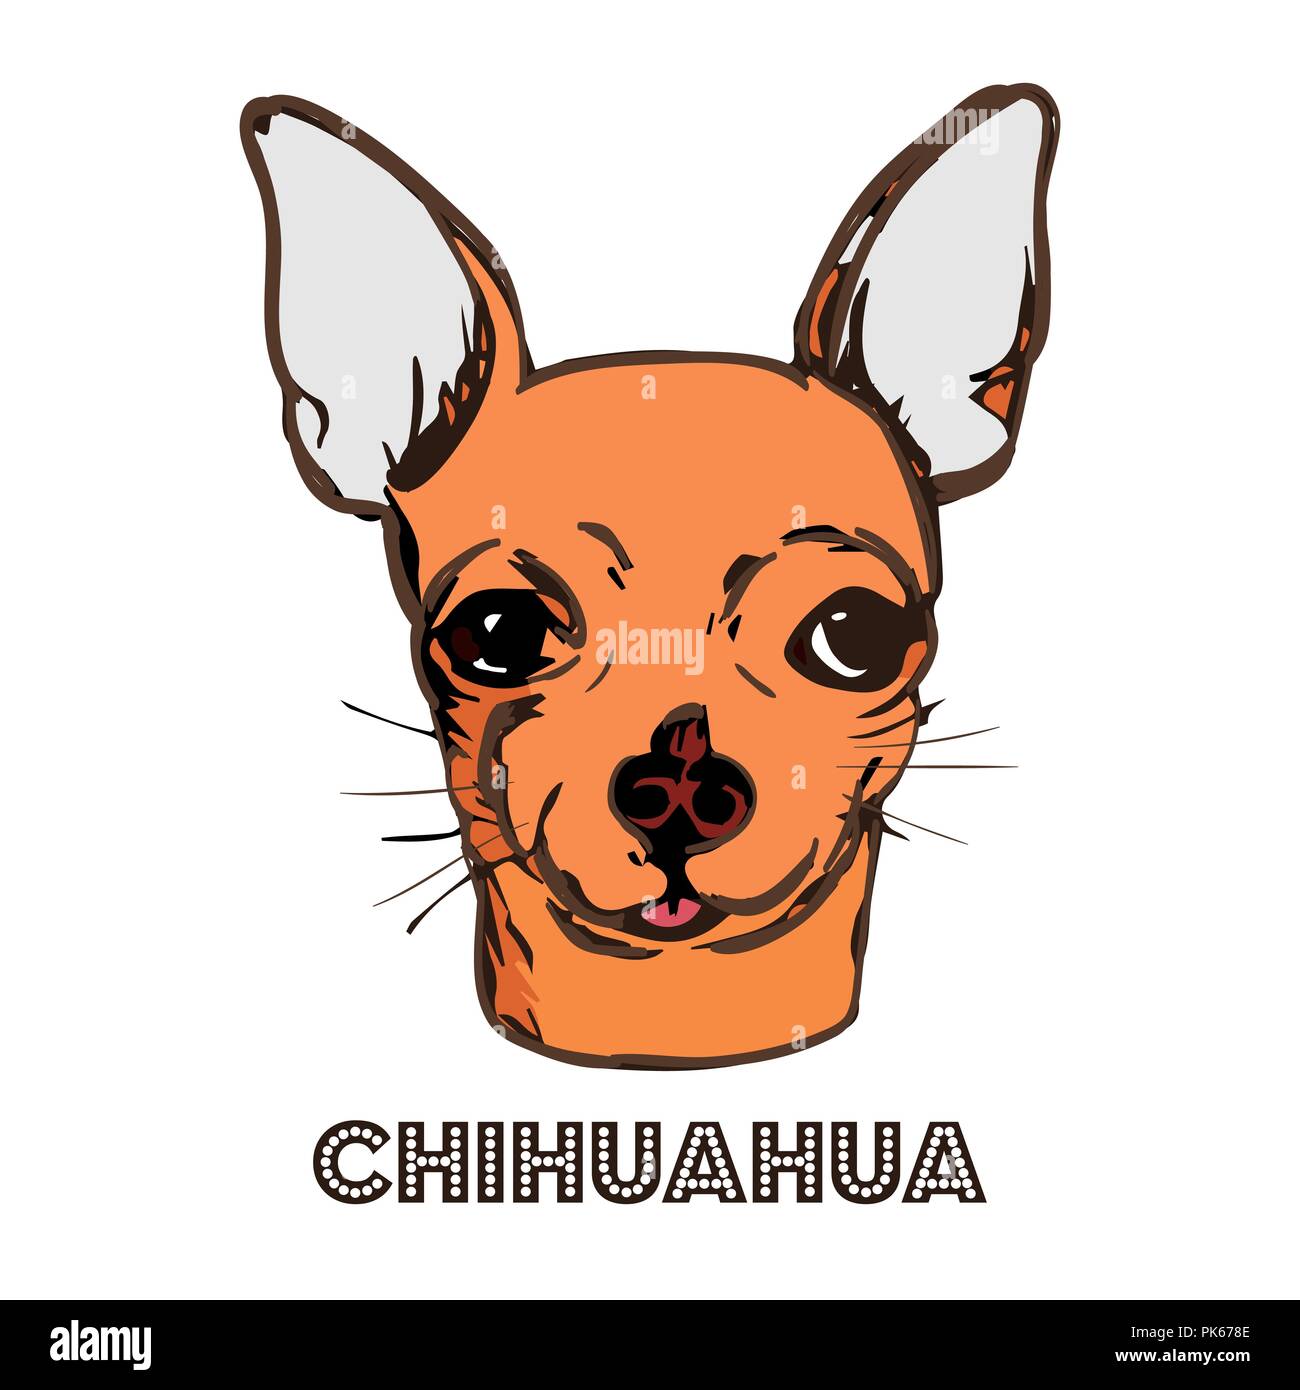 23+ Vector Chihuahua Illustration